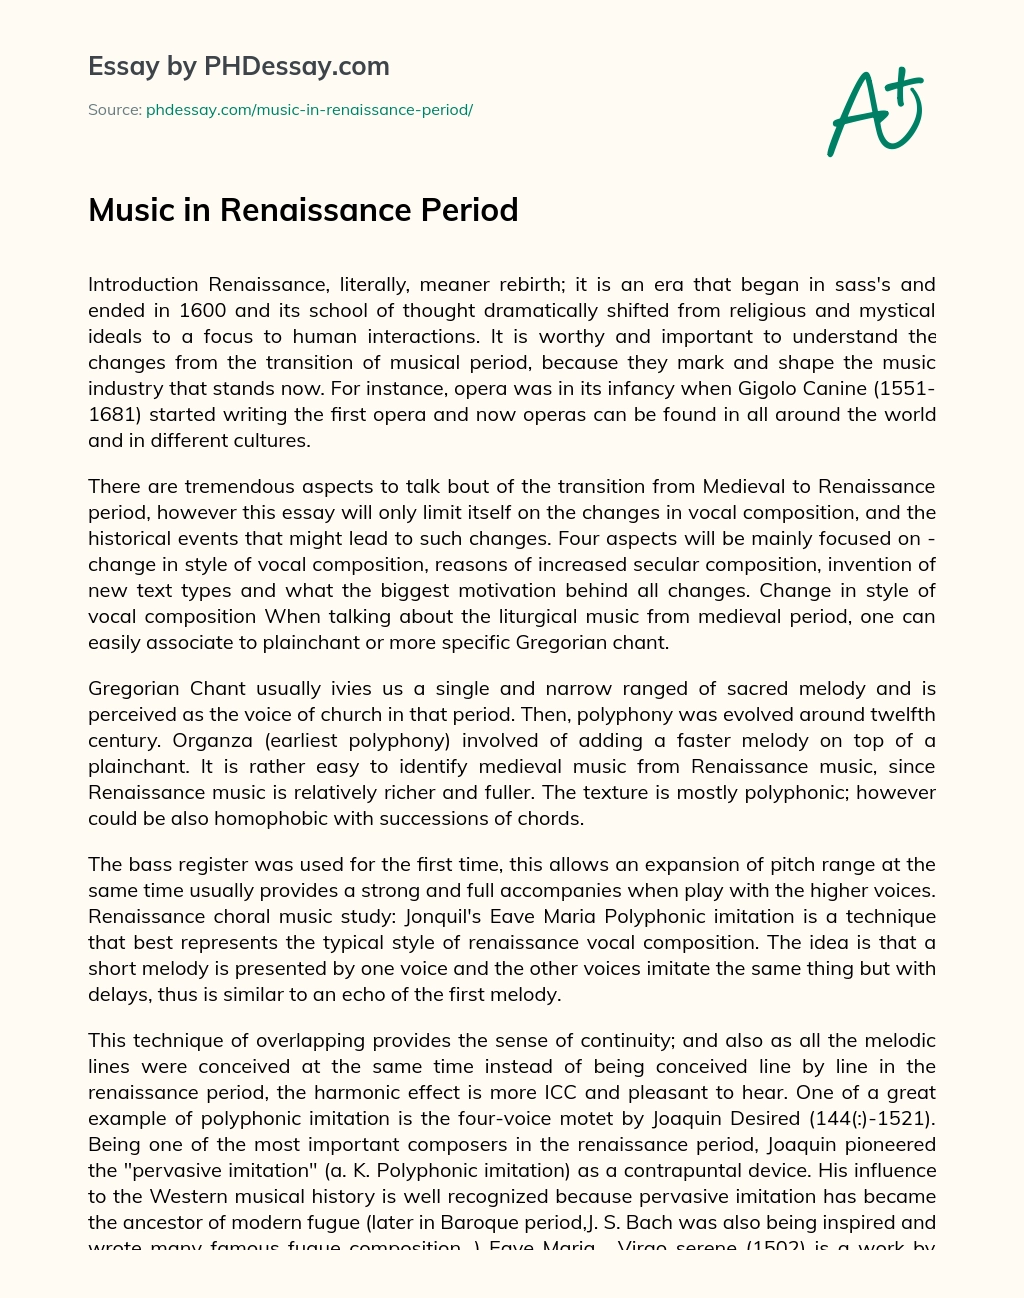 Music in Renaissance Period essay